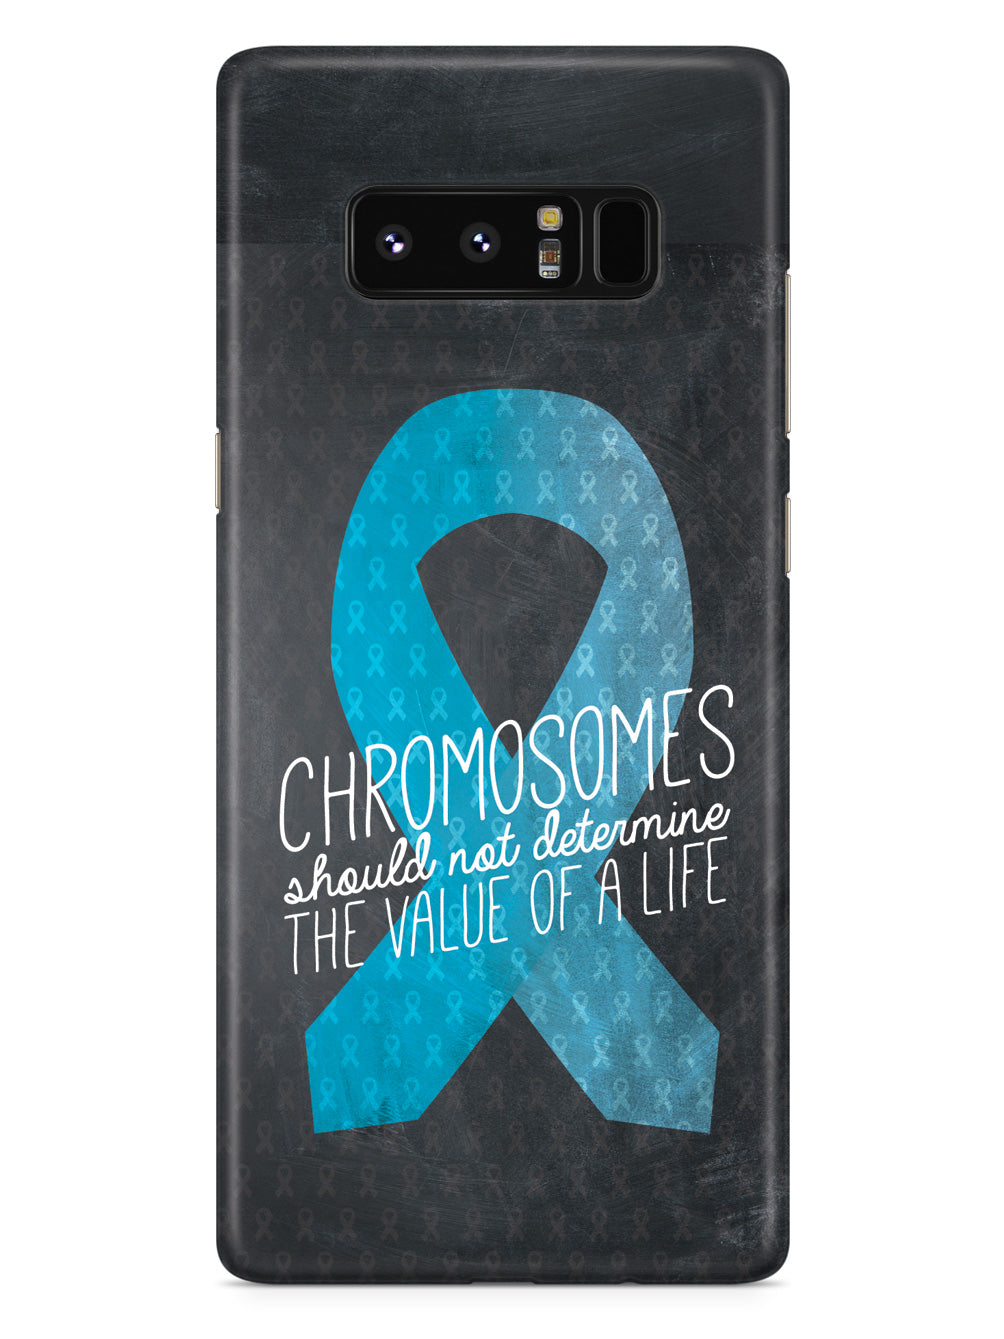 Chromosomes - The Value of Life Case